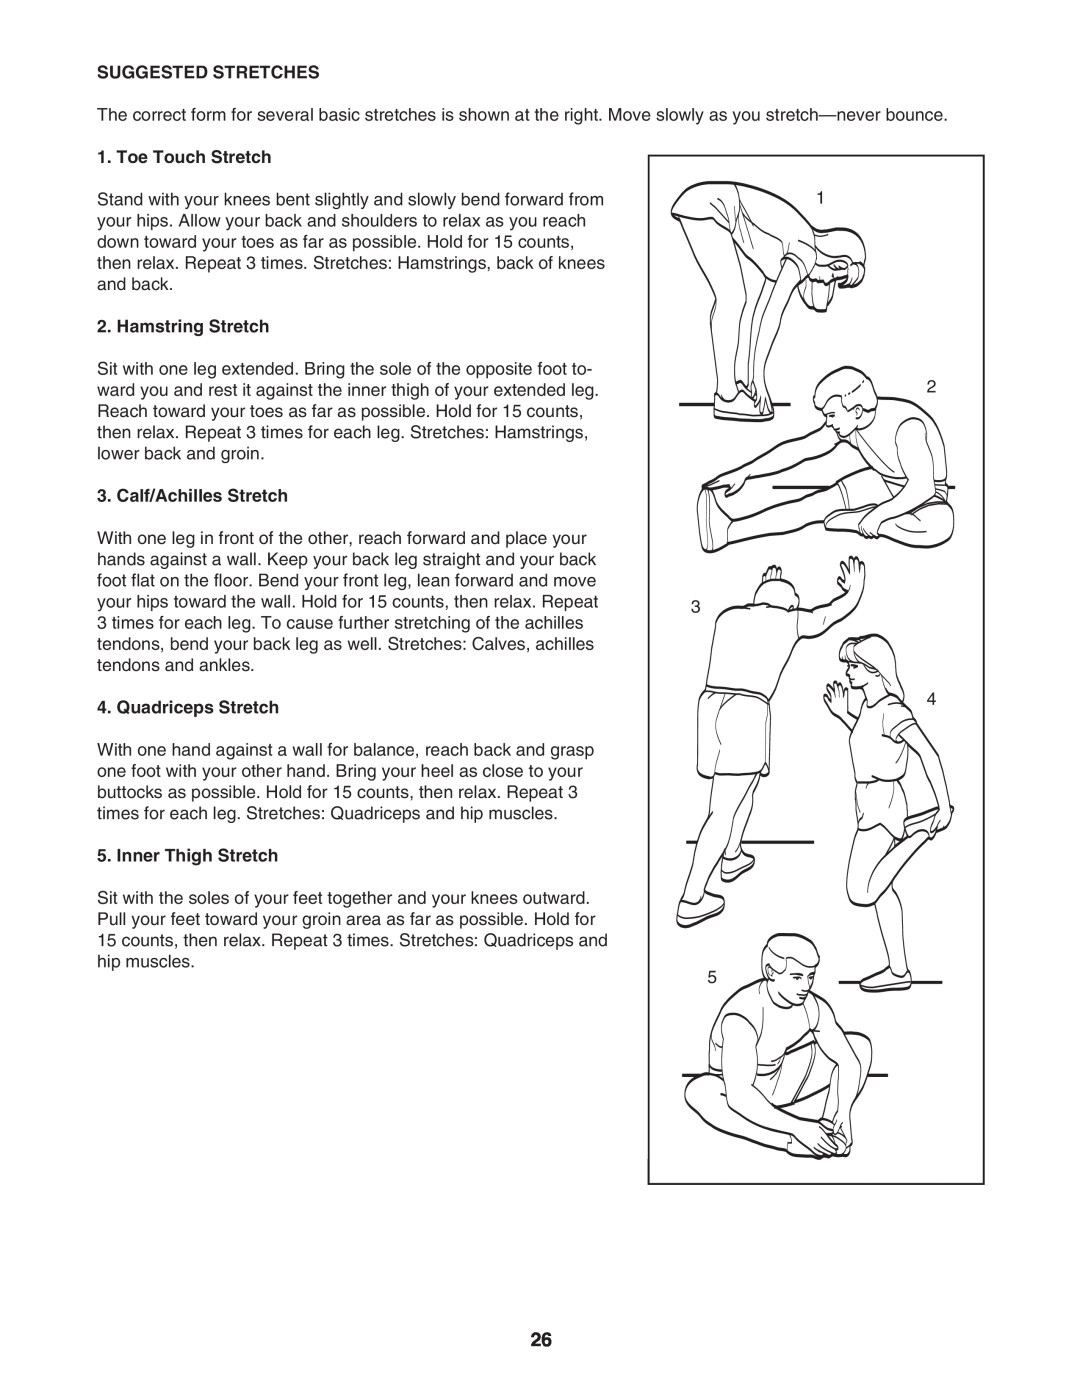 ProForm HGTL09111O Suggested Stretches, Toe Touch Stretch, Hamstring Stretch, Calf/Achilles Stretch, Quadriceps Stretch 